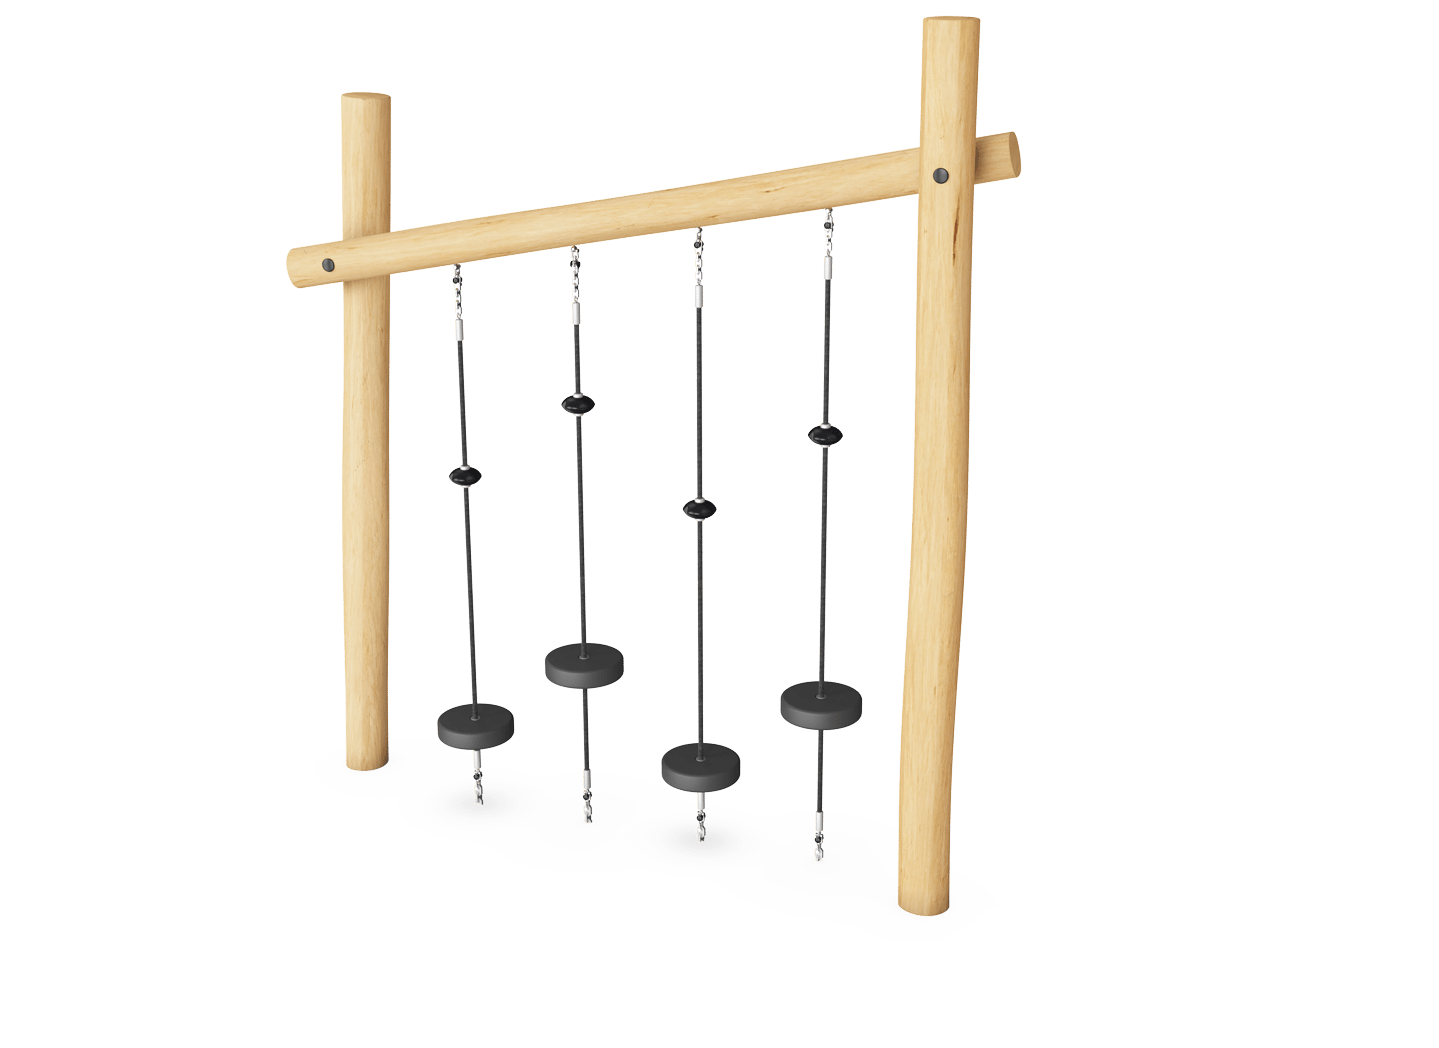 Balance poles